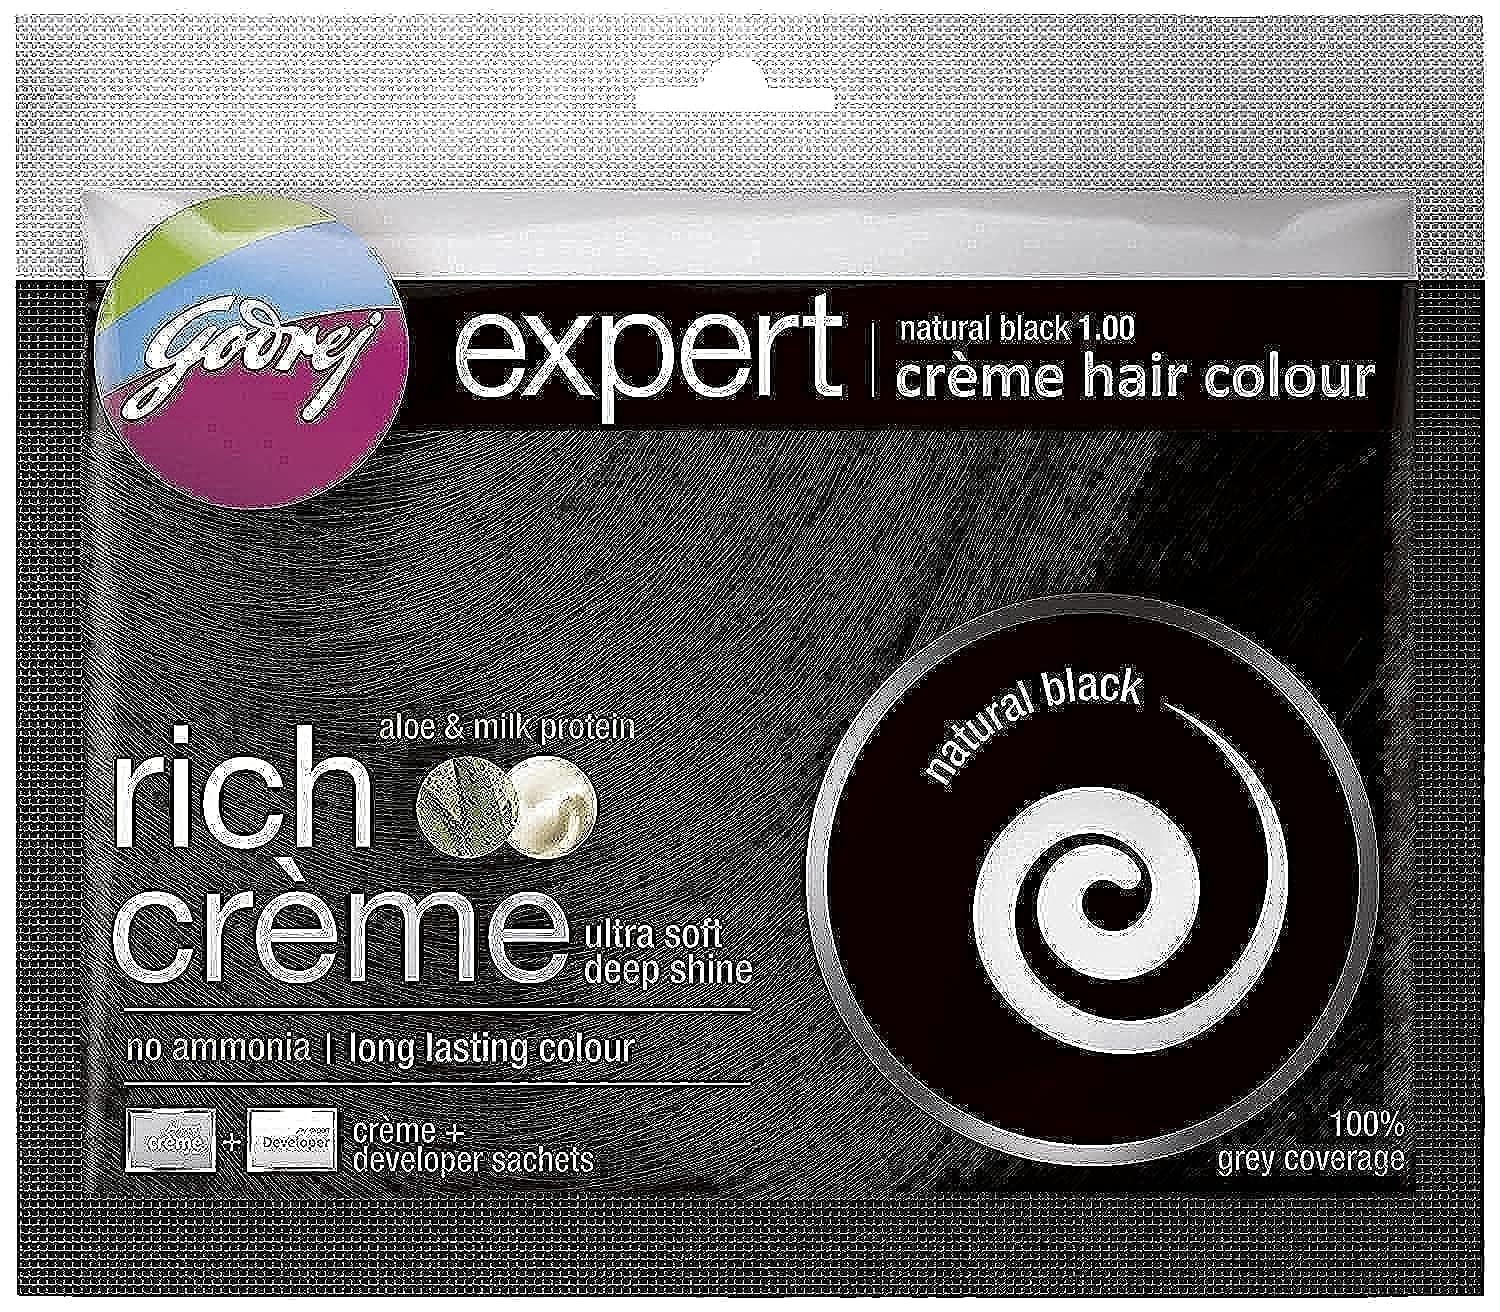 Godrej Expert Creme Hair Colour Natural Black 20G+20Ml